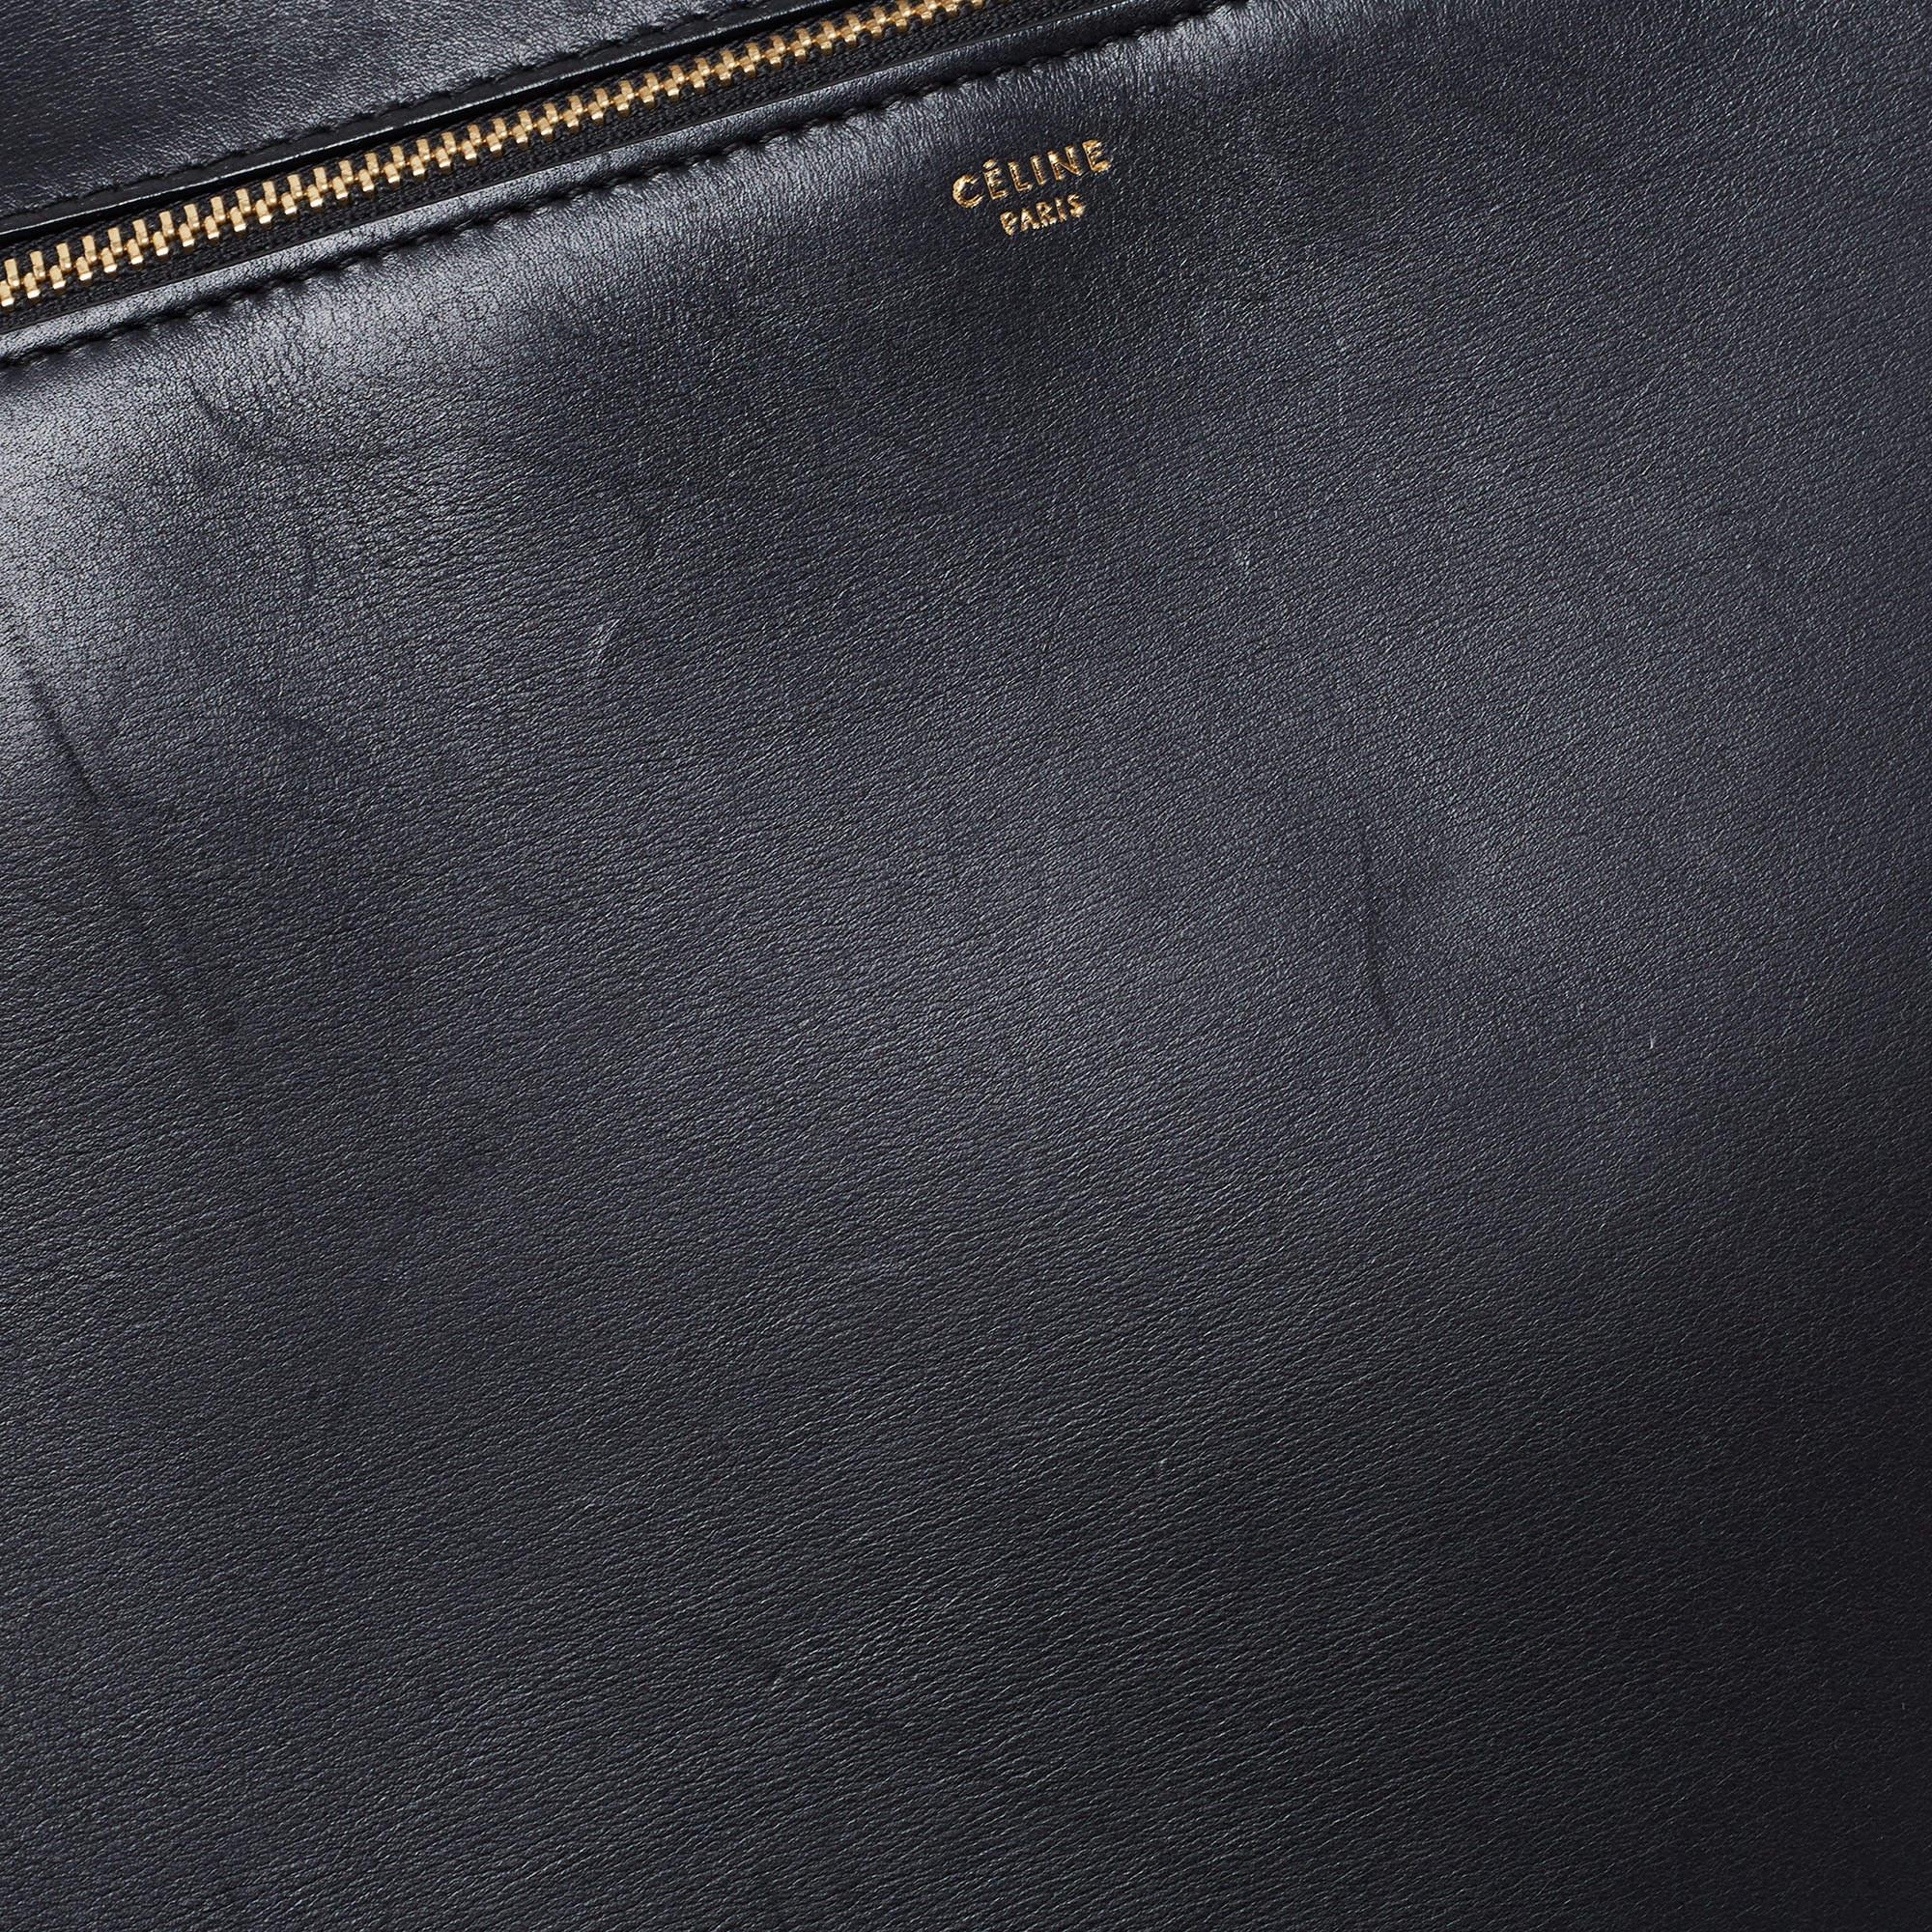 Celine Black Leather Large Edge Top Handle Bag 16